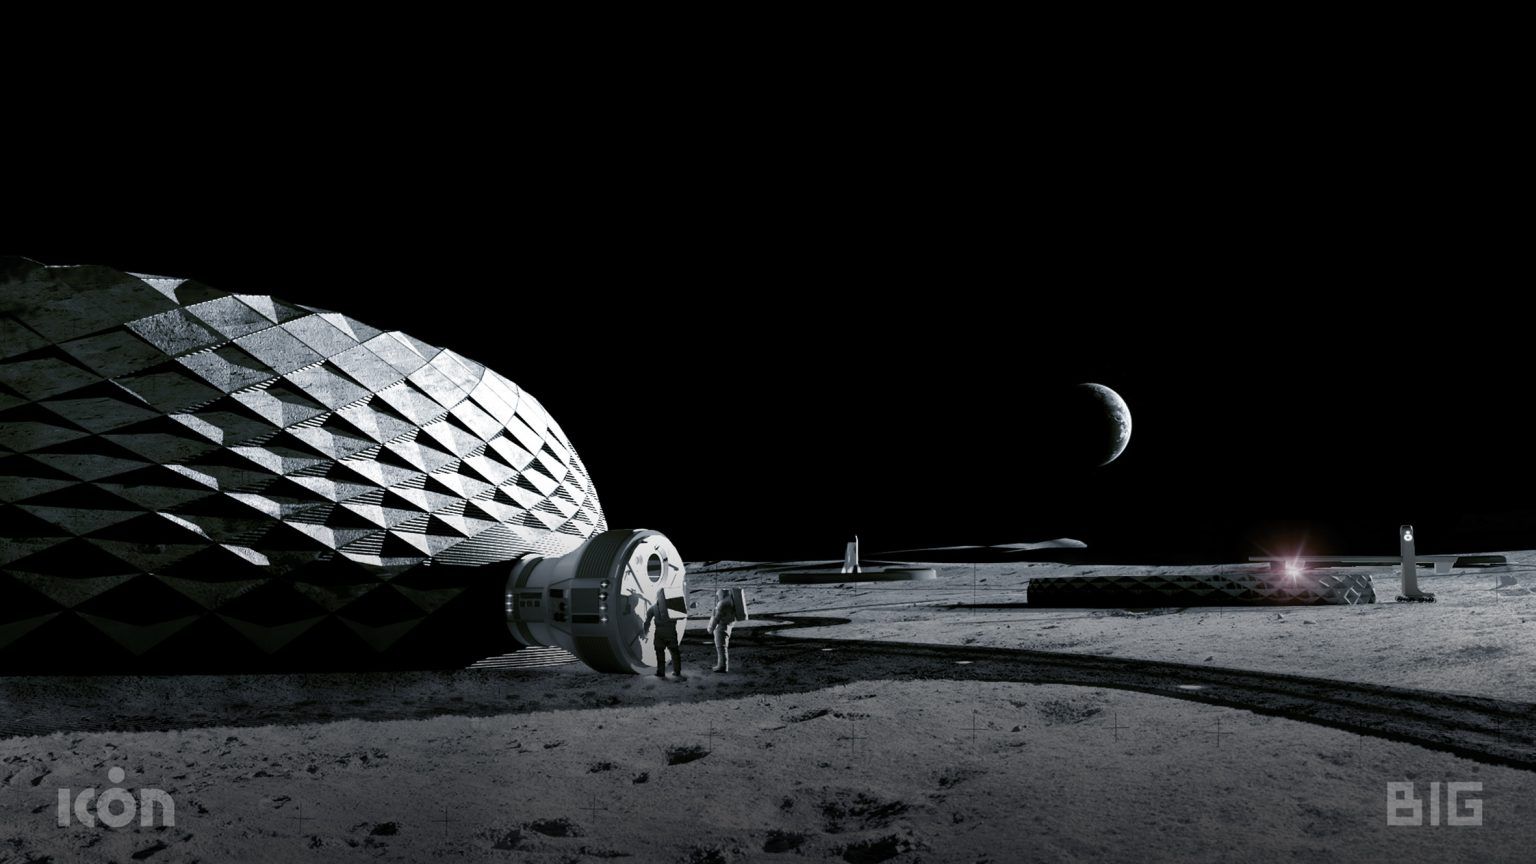 3D printing on the Moon | BIG x ICON